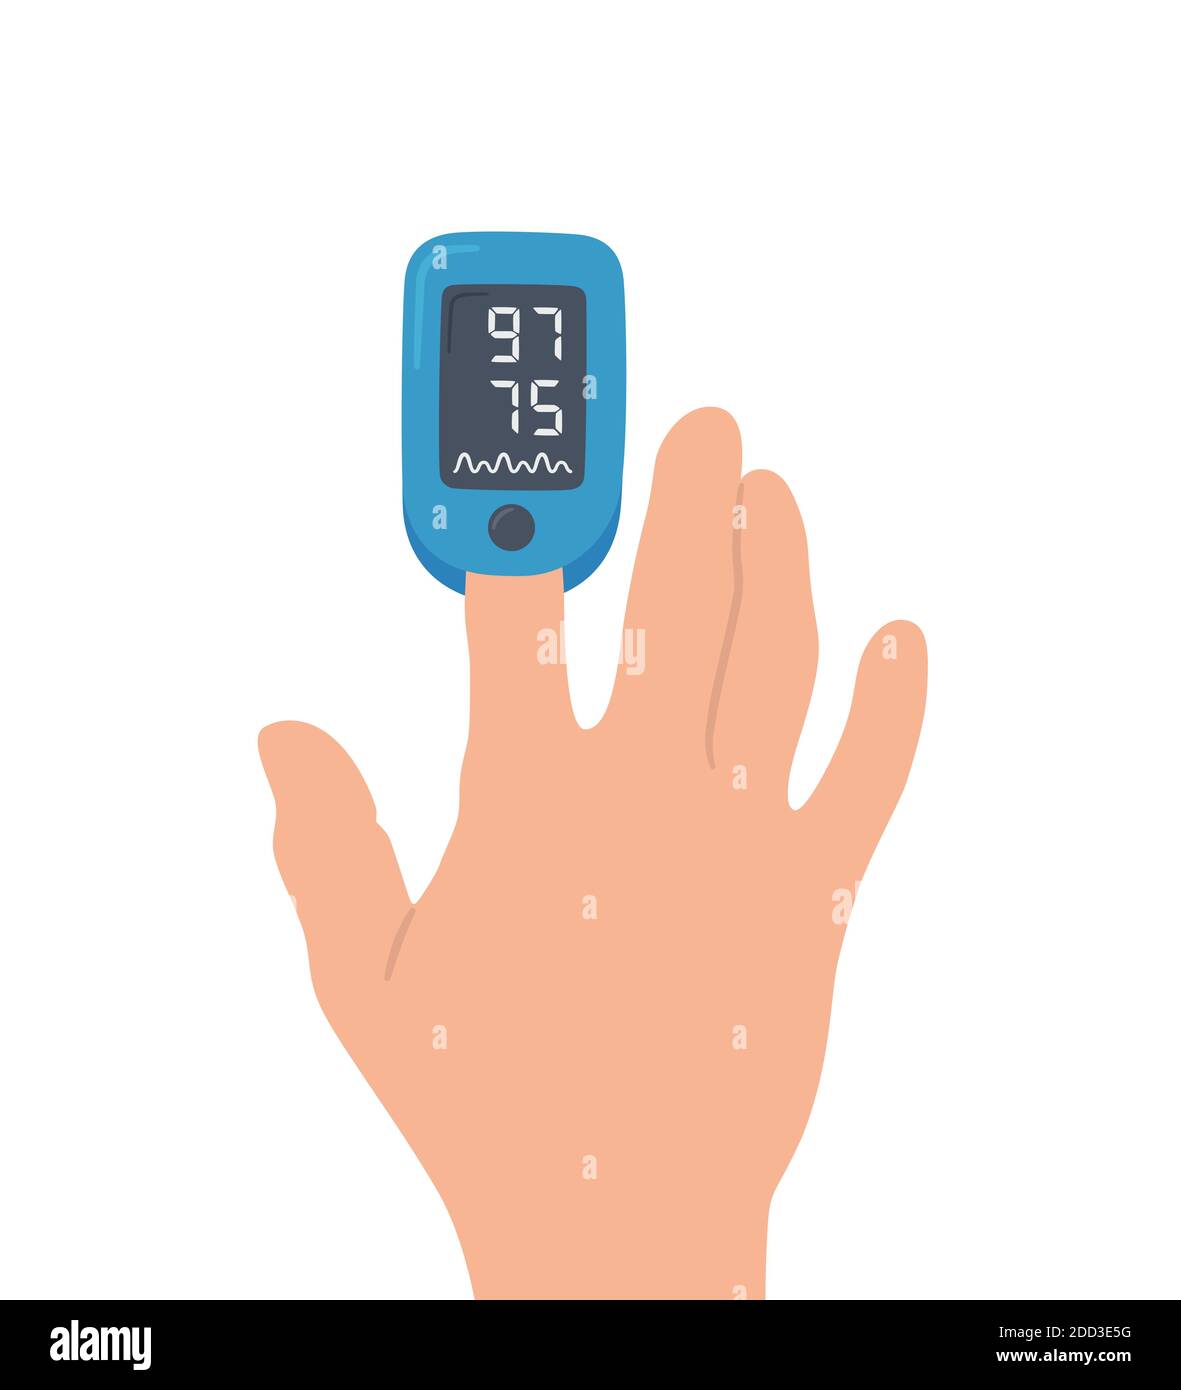 Pulsoximeter am Finger. Digitales Gerät zur Messung der Sauerstoffsättigung. Stock Vektor